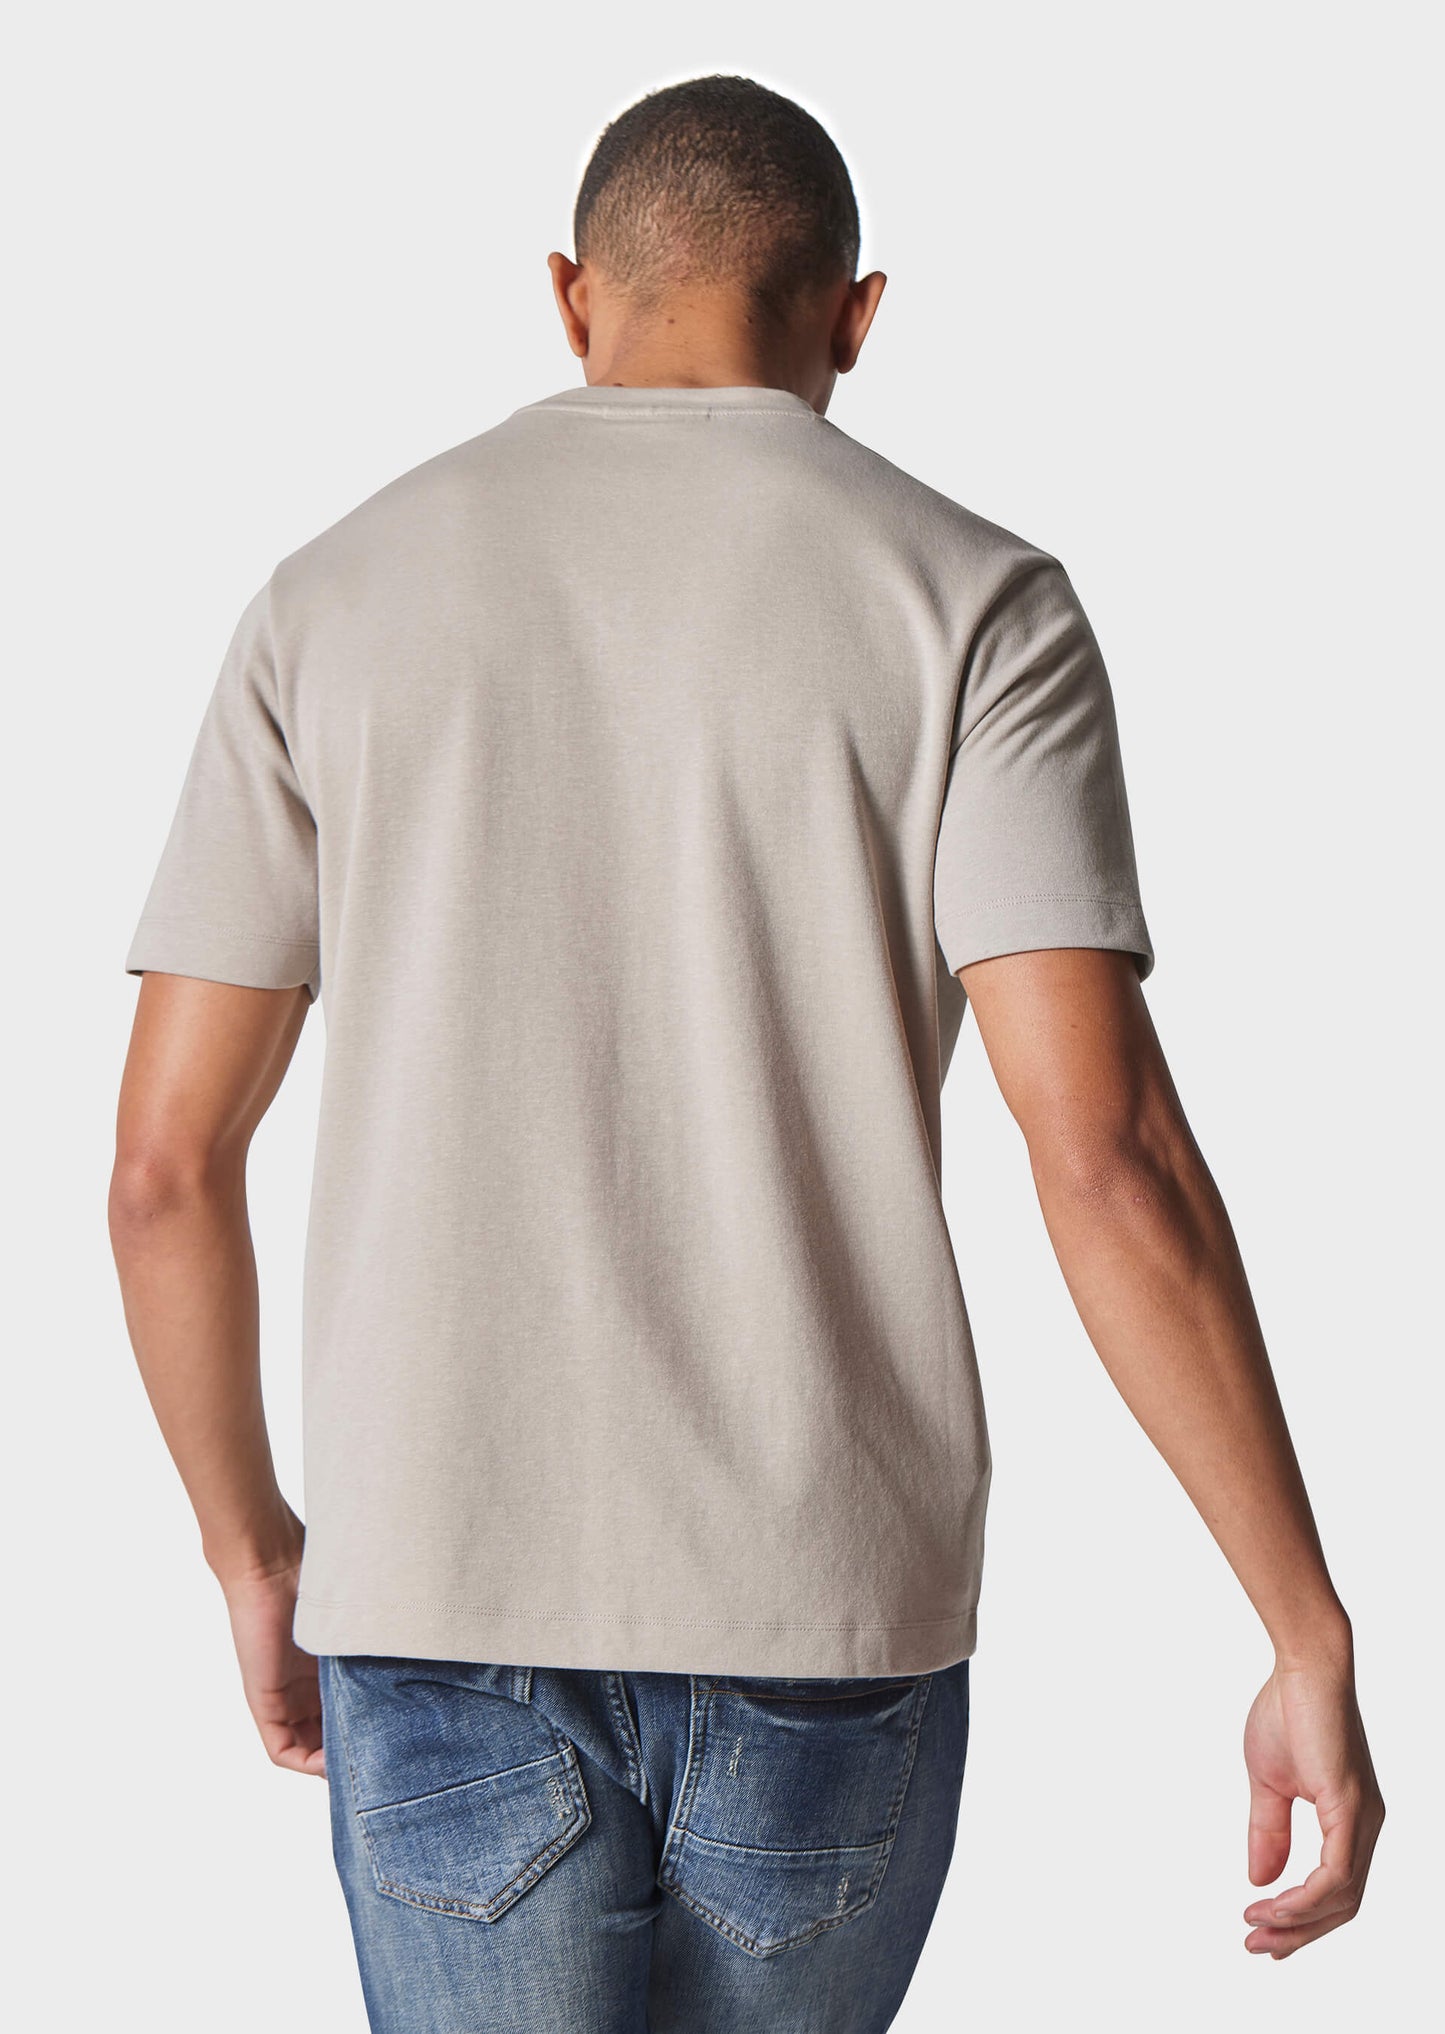 Sheridan Neutral T-Shirt